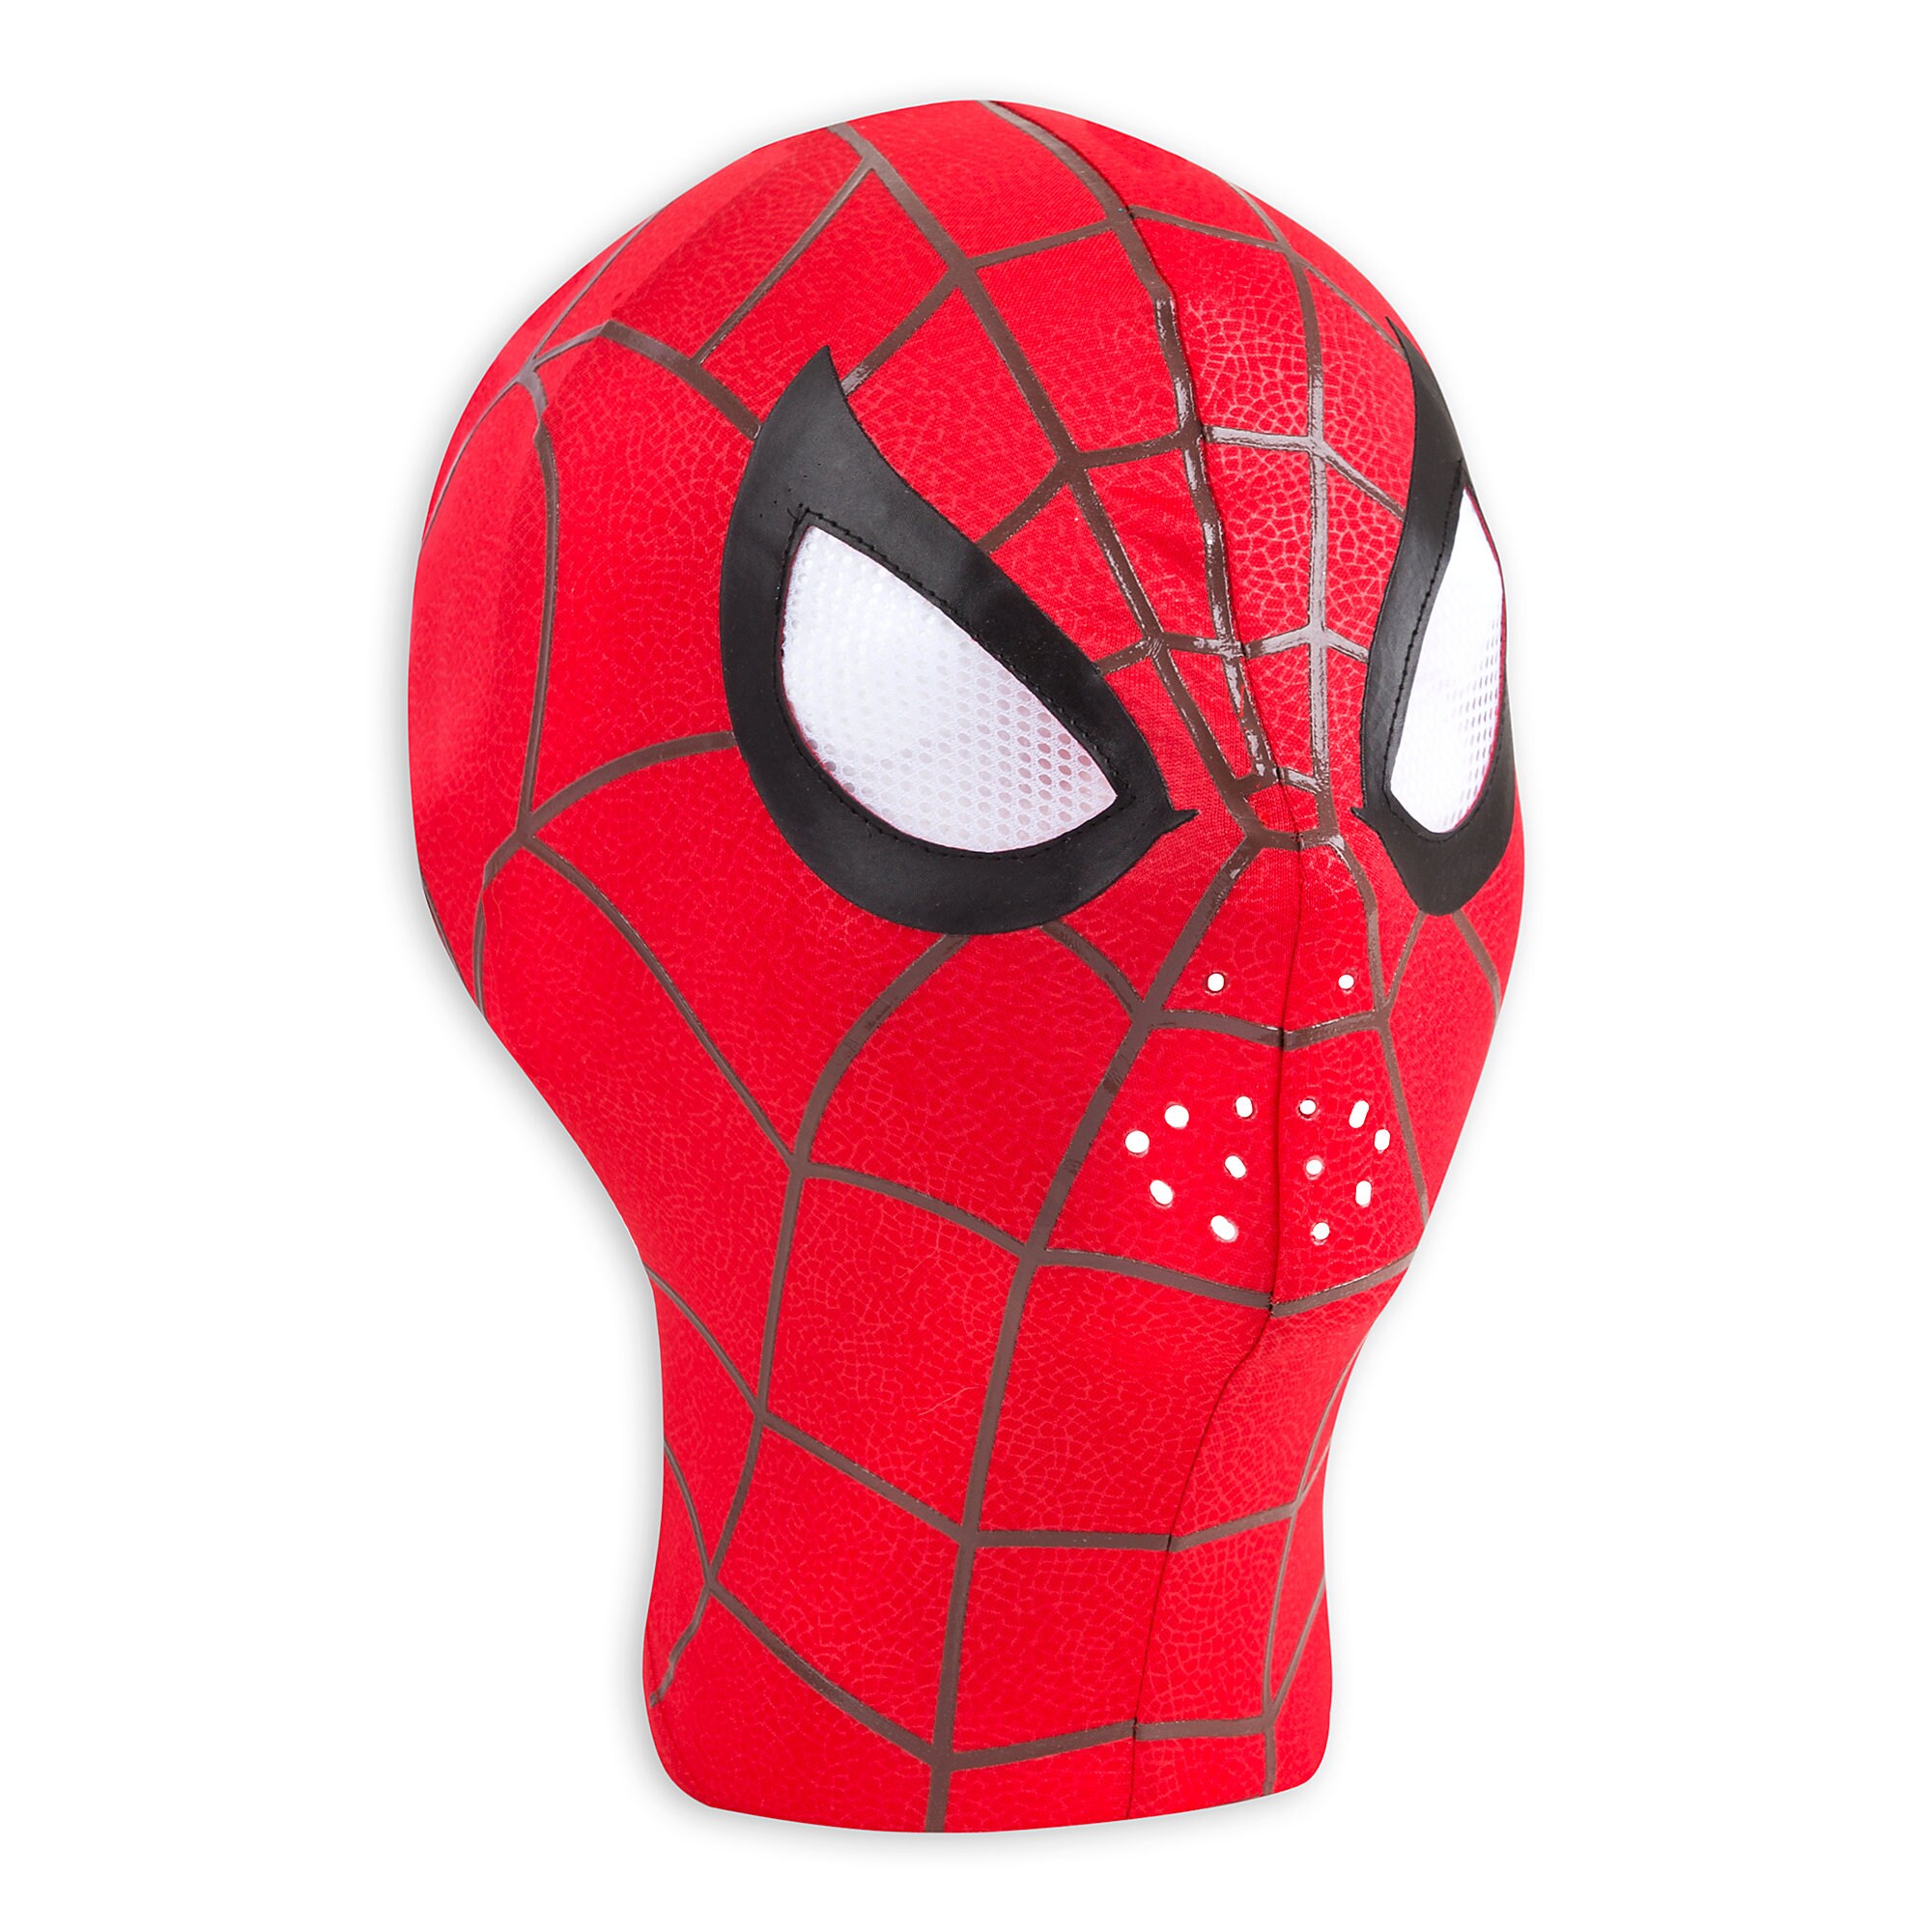 Spider-Man Ultimate Light-Up Costume for Kids